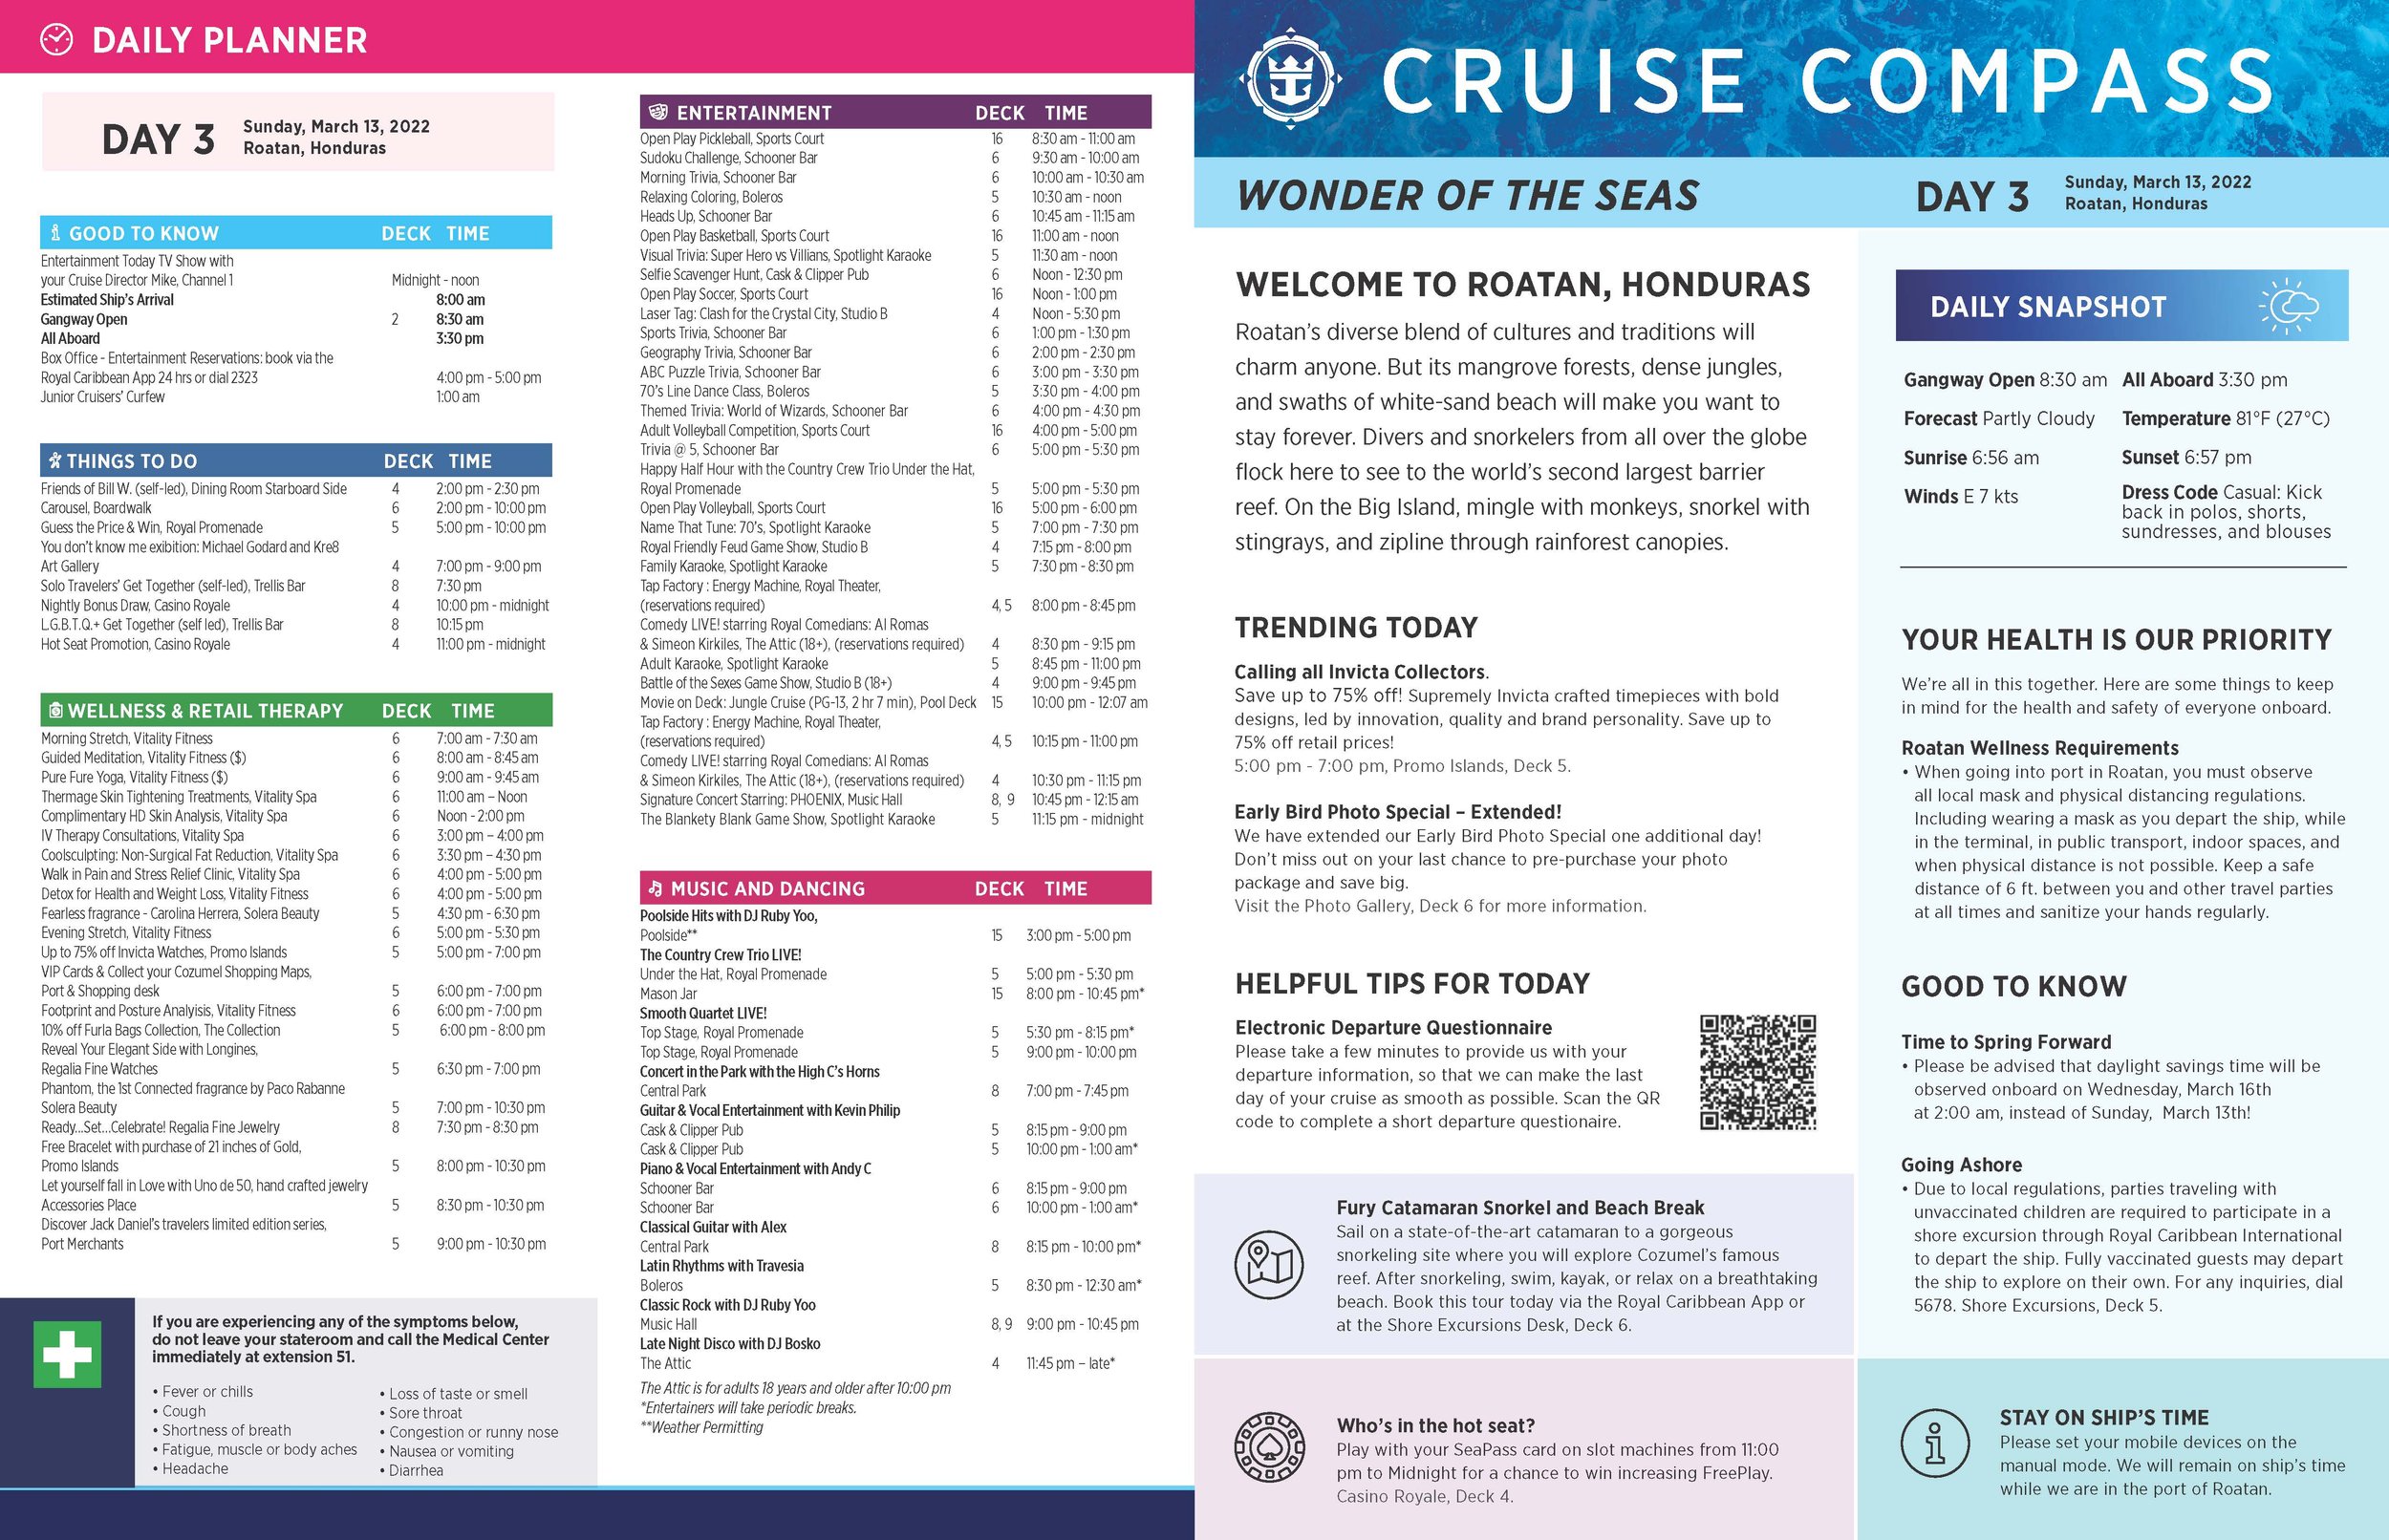 Cruise Compass - Day 3 - Sunday, March 13. 2022, Roatan, Honduras_Page_1.jpg